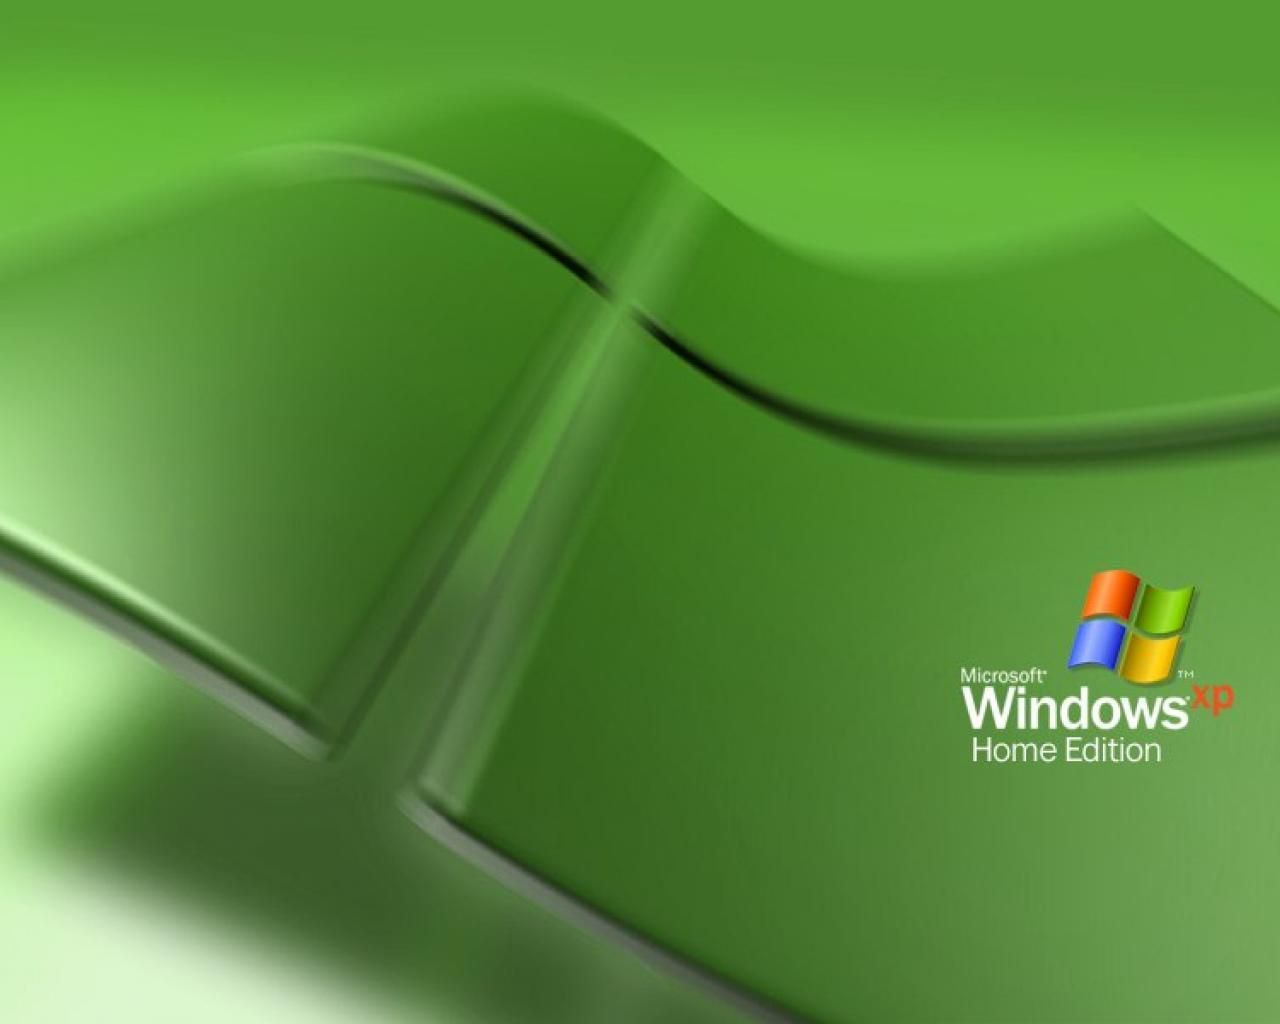 windows xp home edition hd wallpaper - (#18014) - HQ Desktop ...